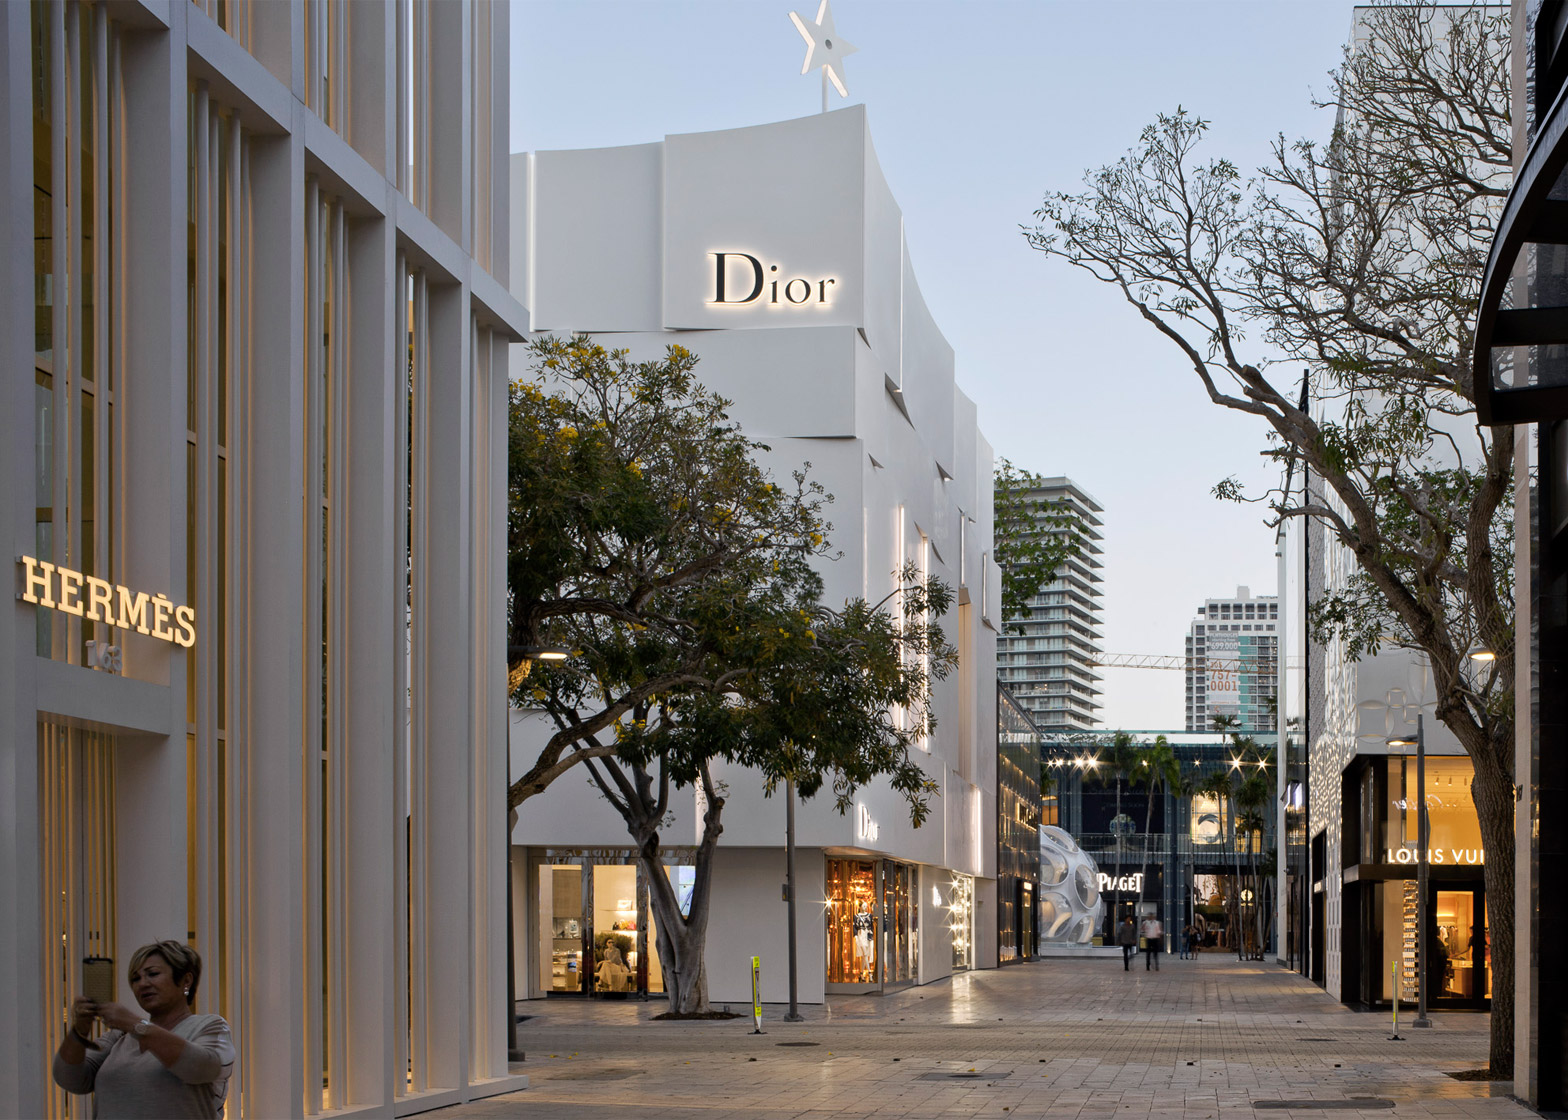 Miami Dior boutique by Barbarito Bancel has pleats